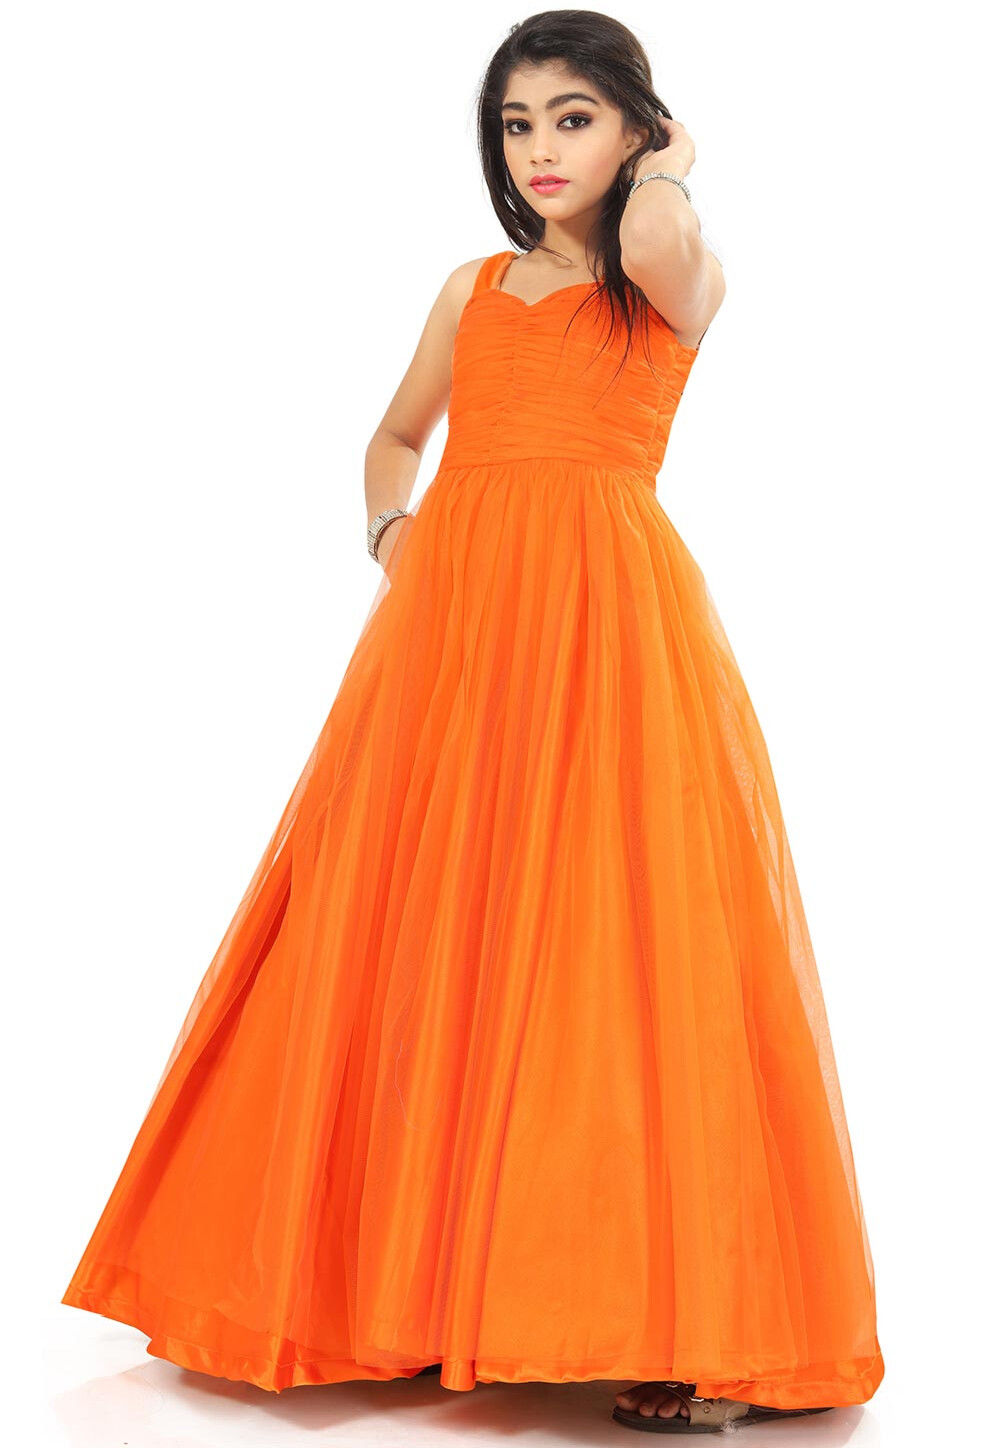 35+ Beautiful Orange Colour Aso-ebi Styles to Inspire you - Stylish Naija |  Latest african fashion dresses, African fashion, African fashion dresses